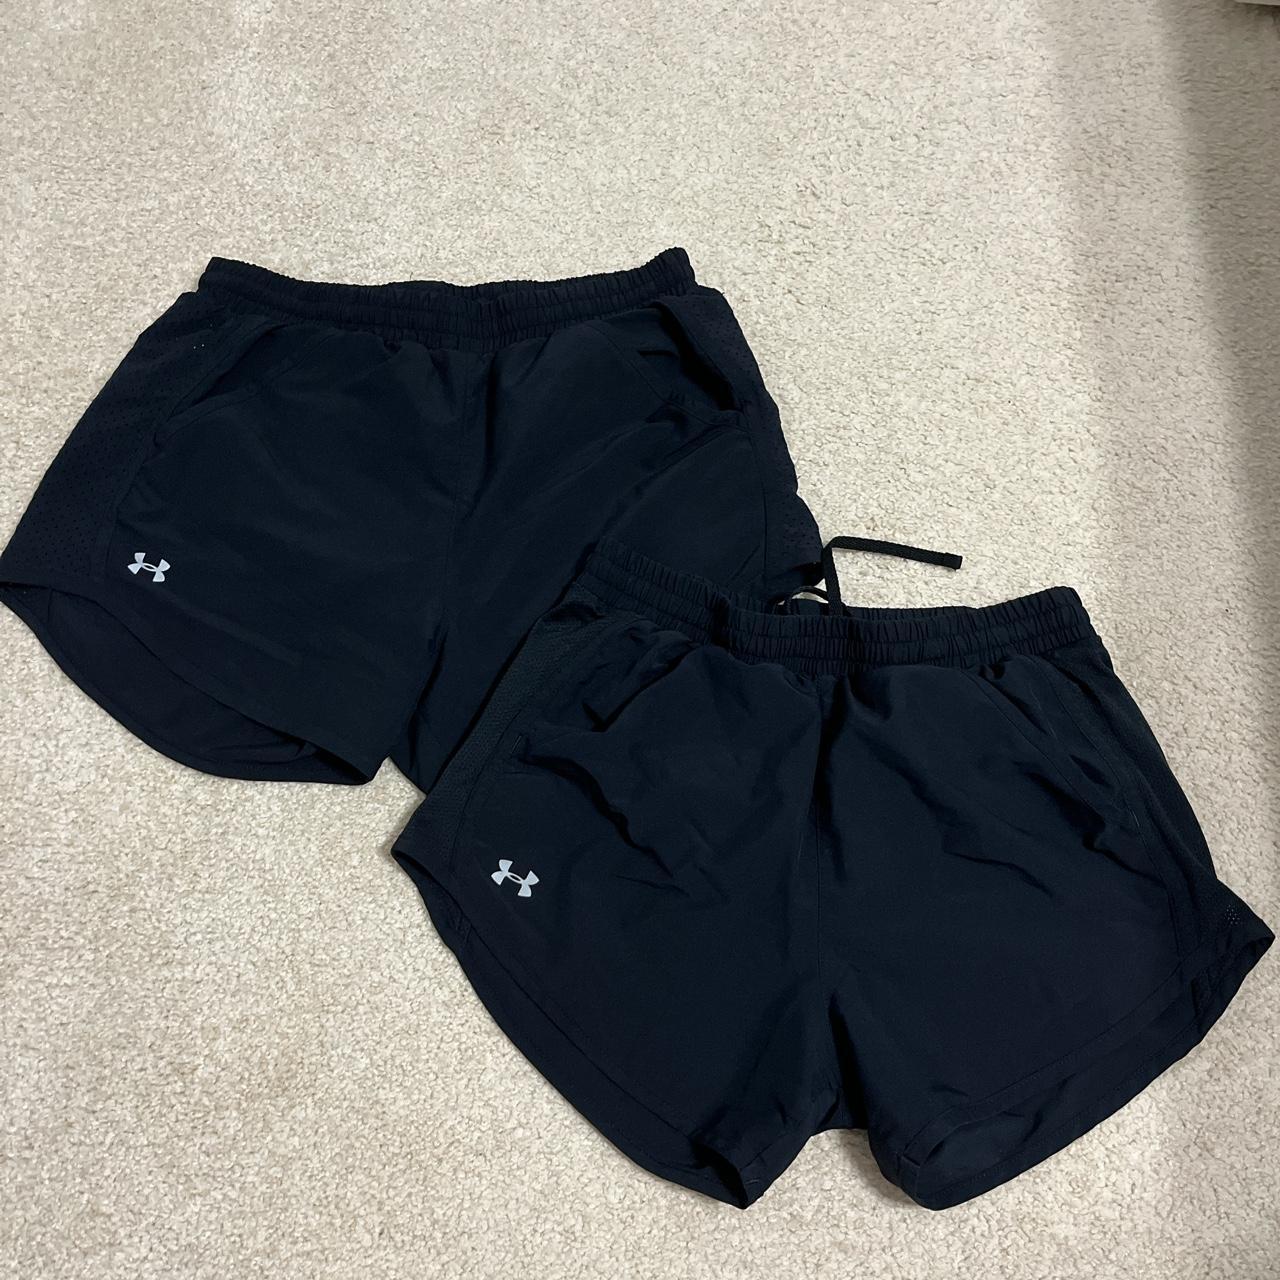 under armor black shorts size xs left shorts/grey - Depop